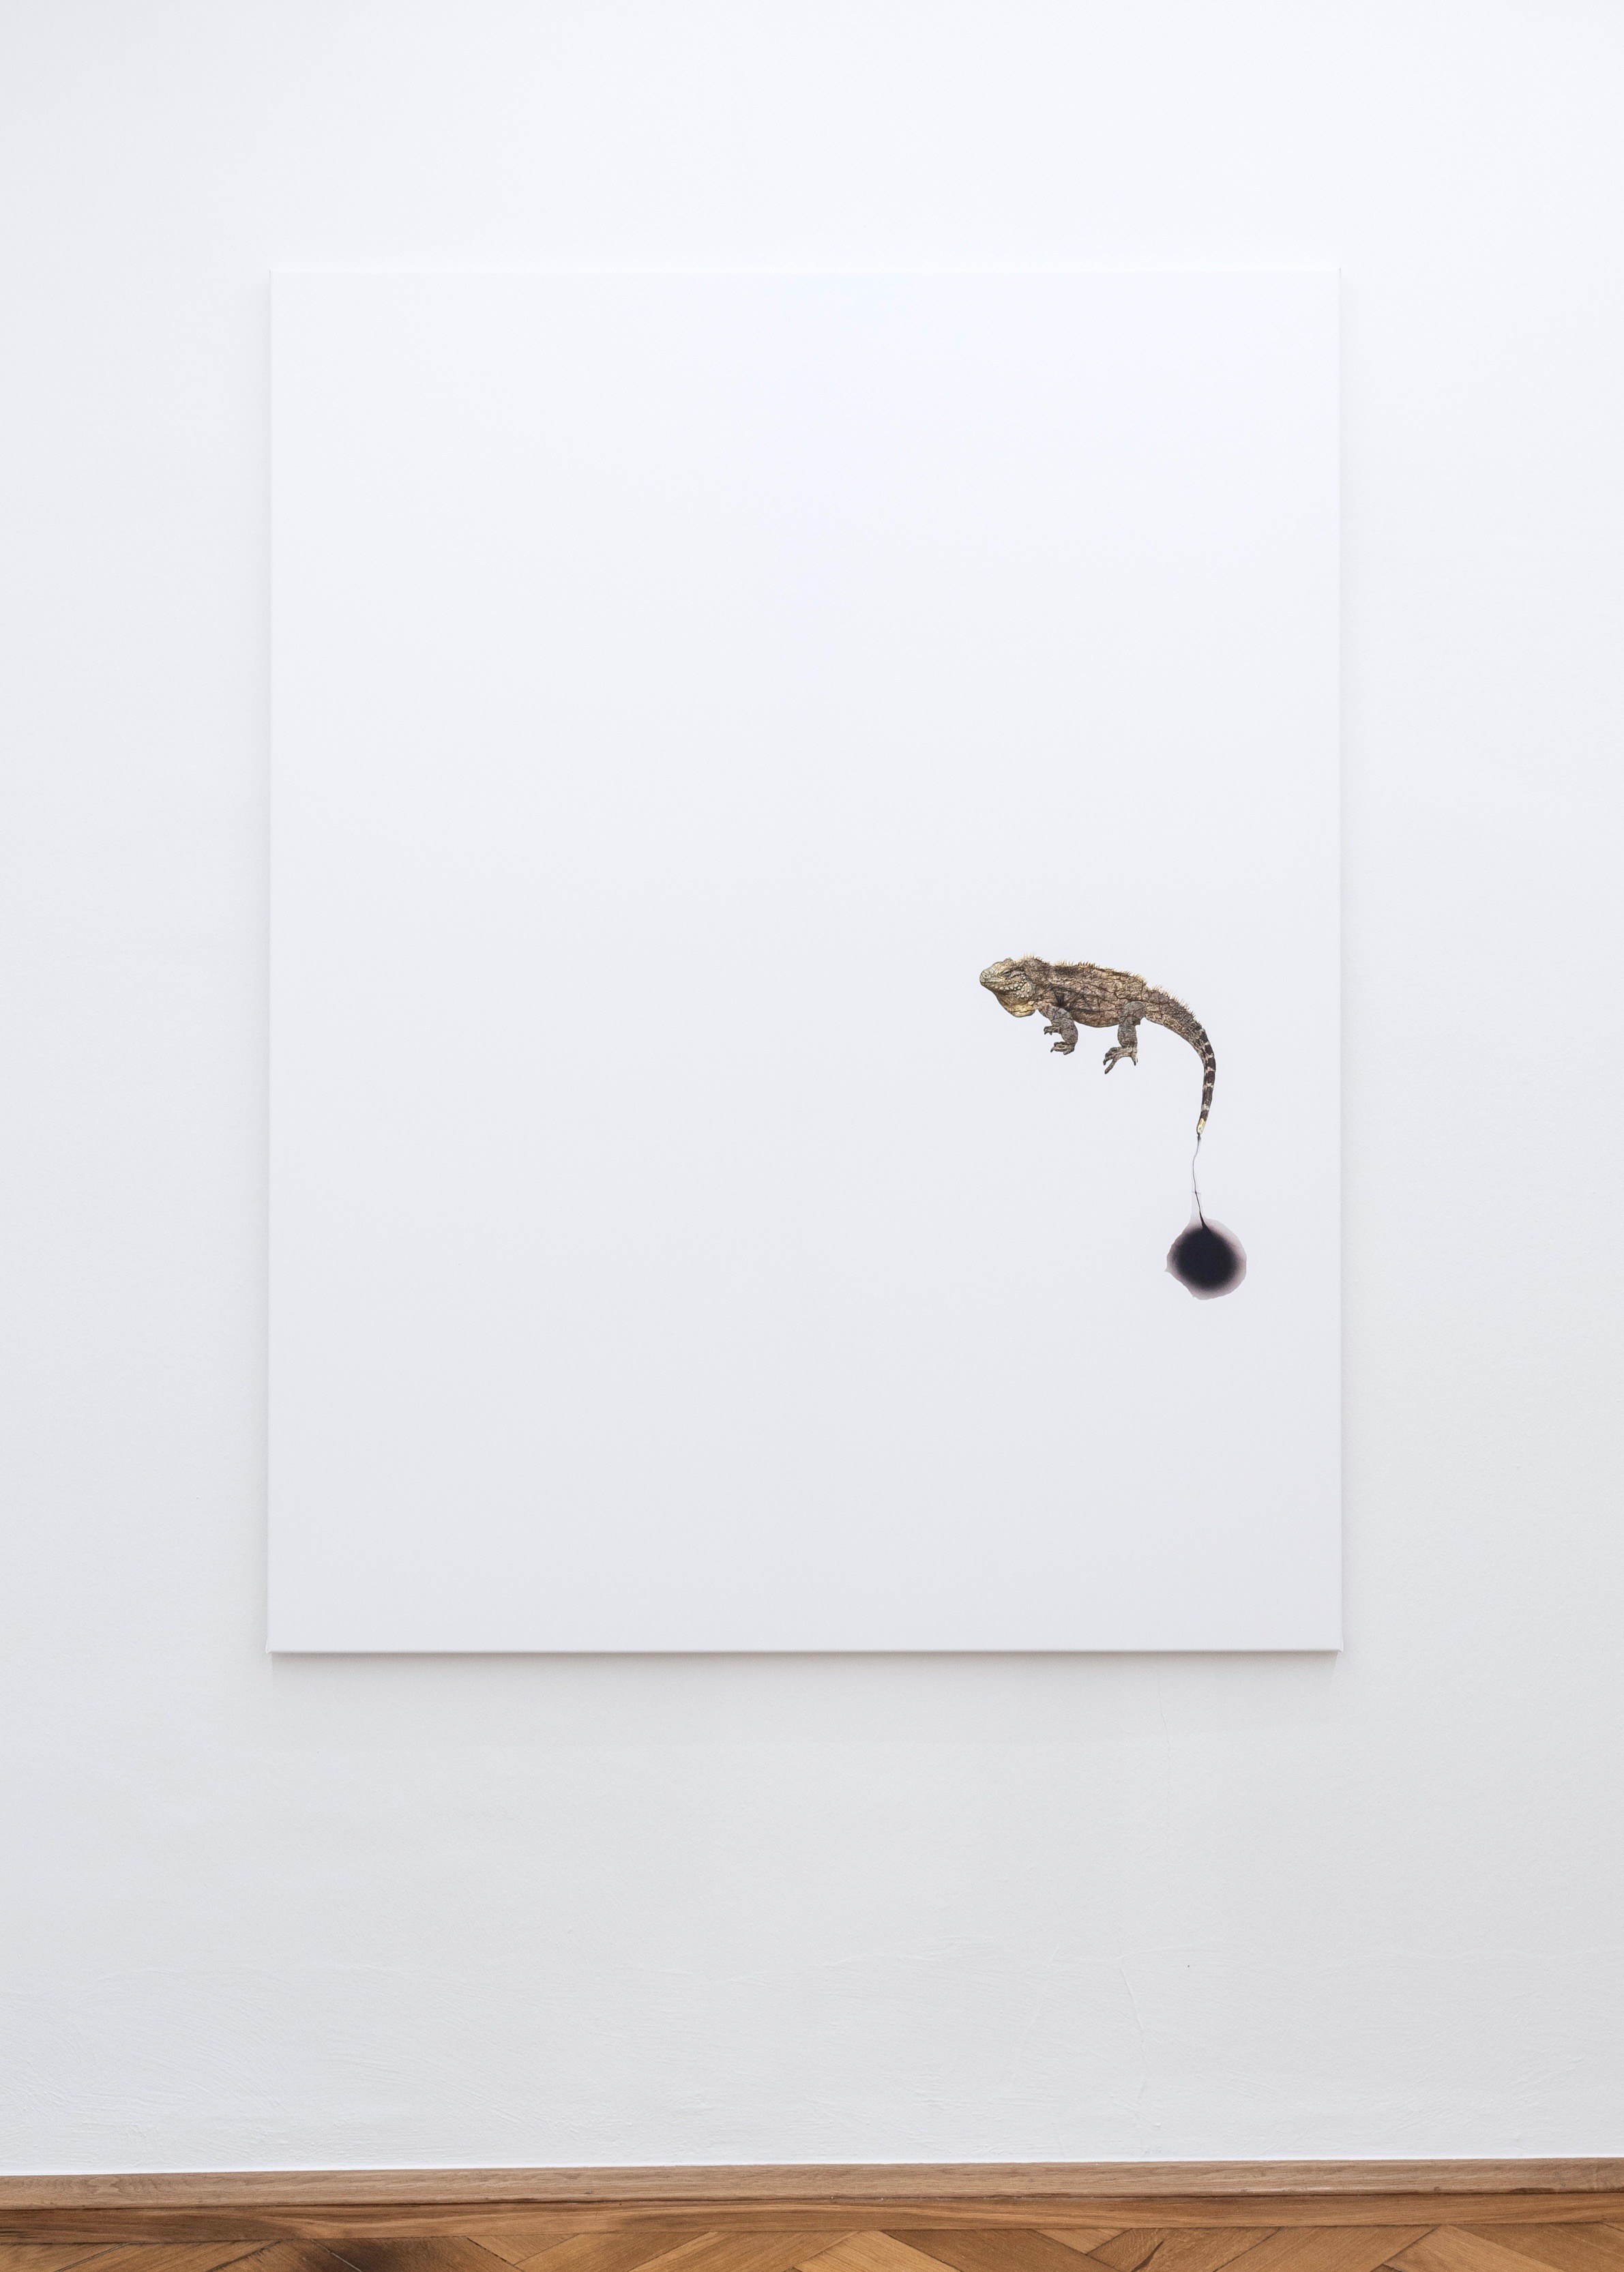 Taslima Ahmed, "Reconstructor Painting (Iguana)", 2022, UV print on canvas, 159 x 123 cm